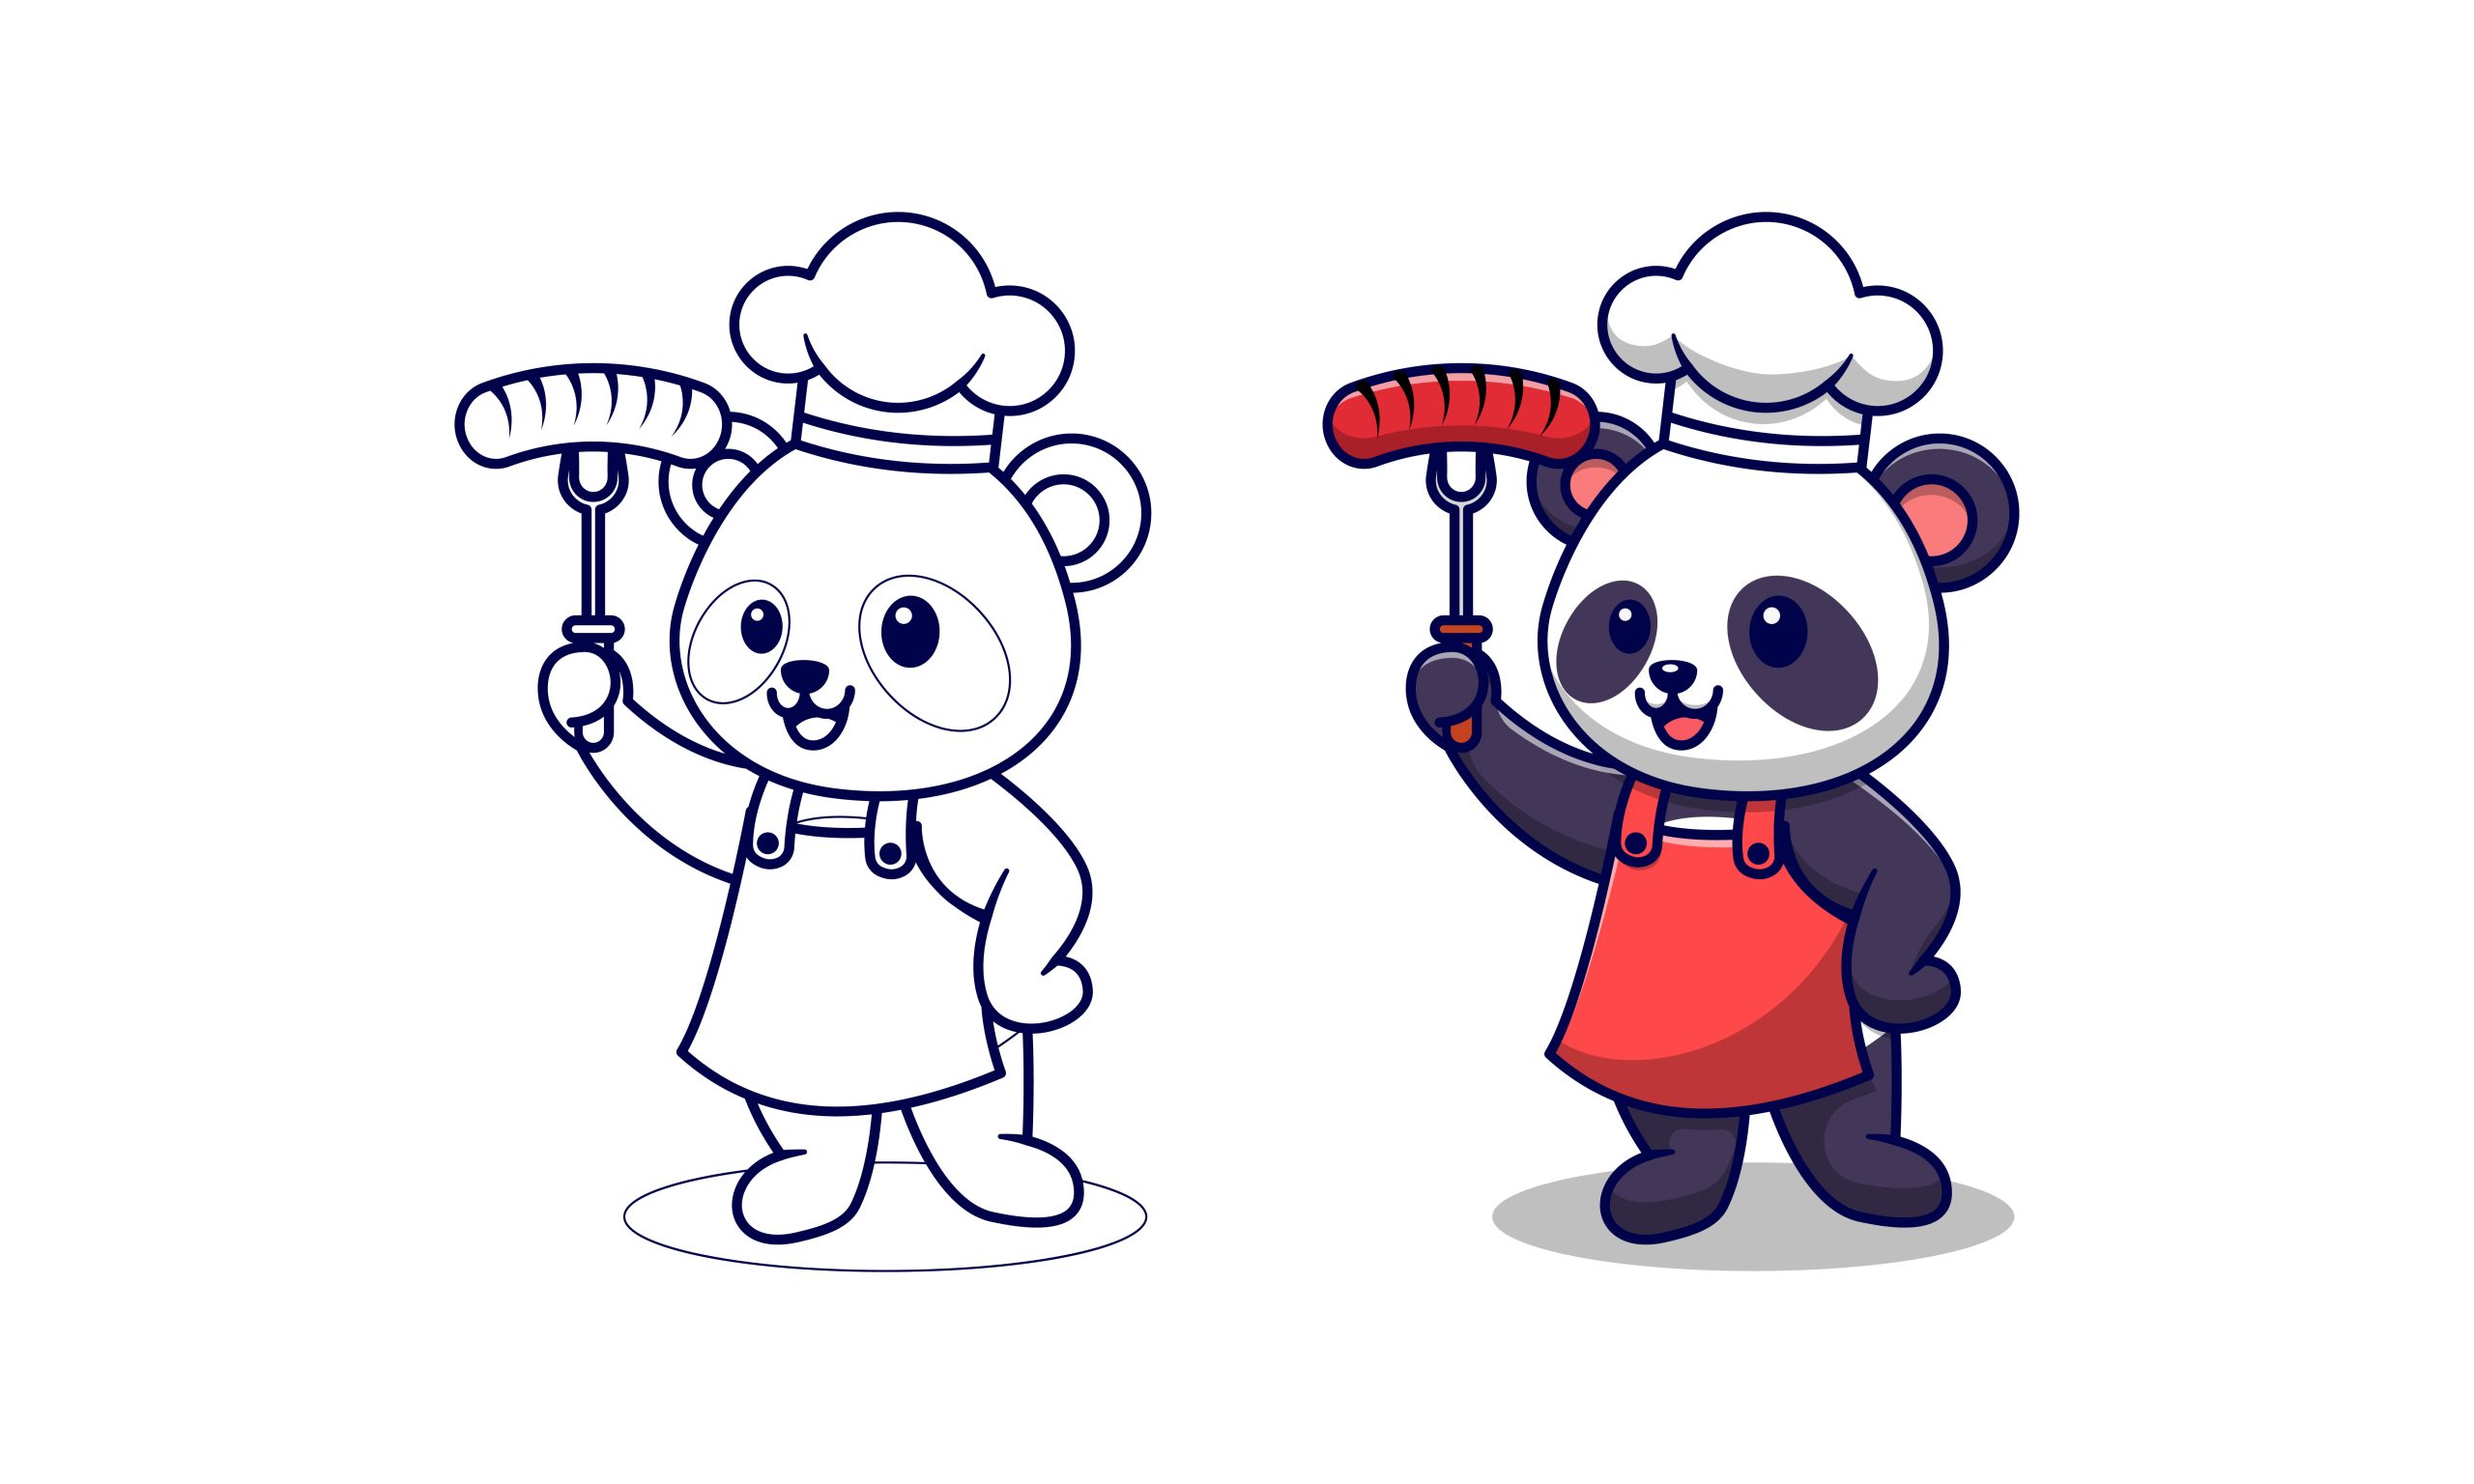 Panda-cozinheiro